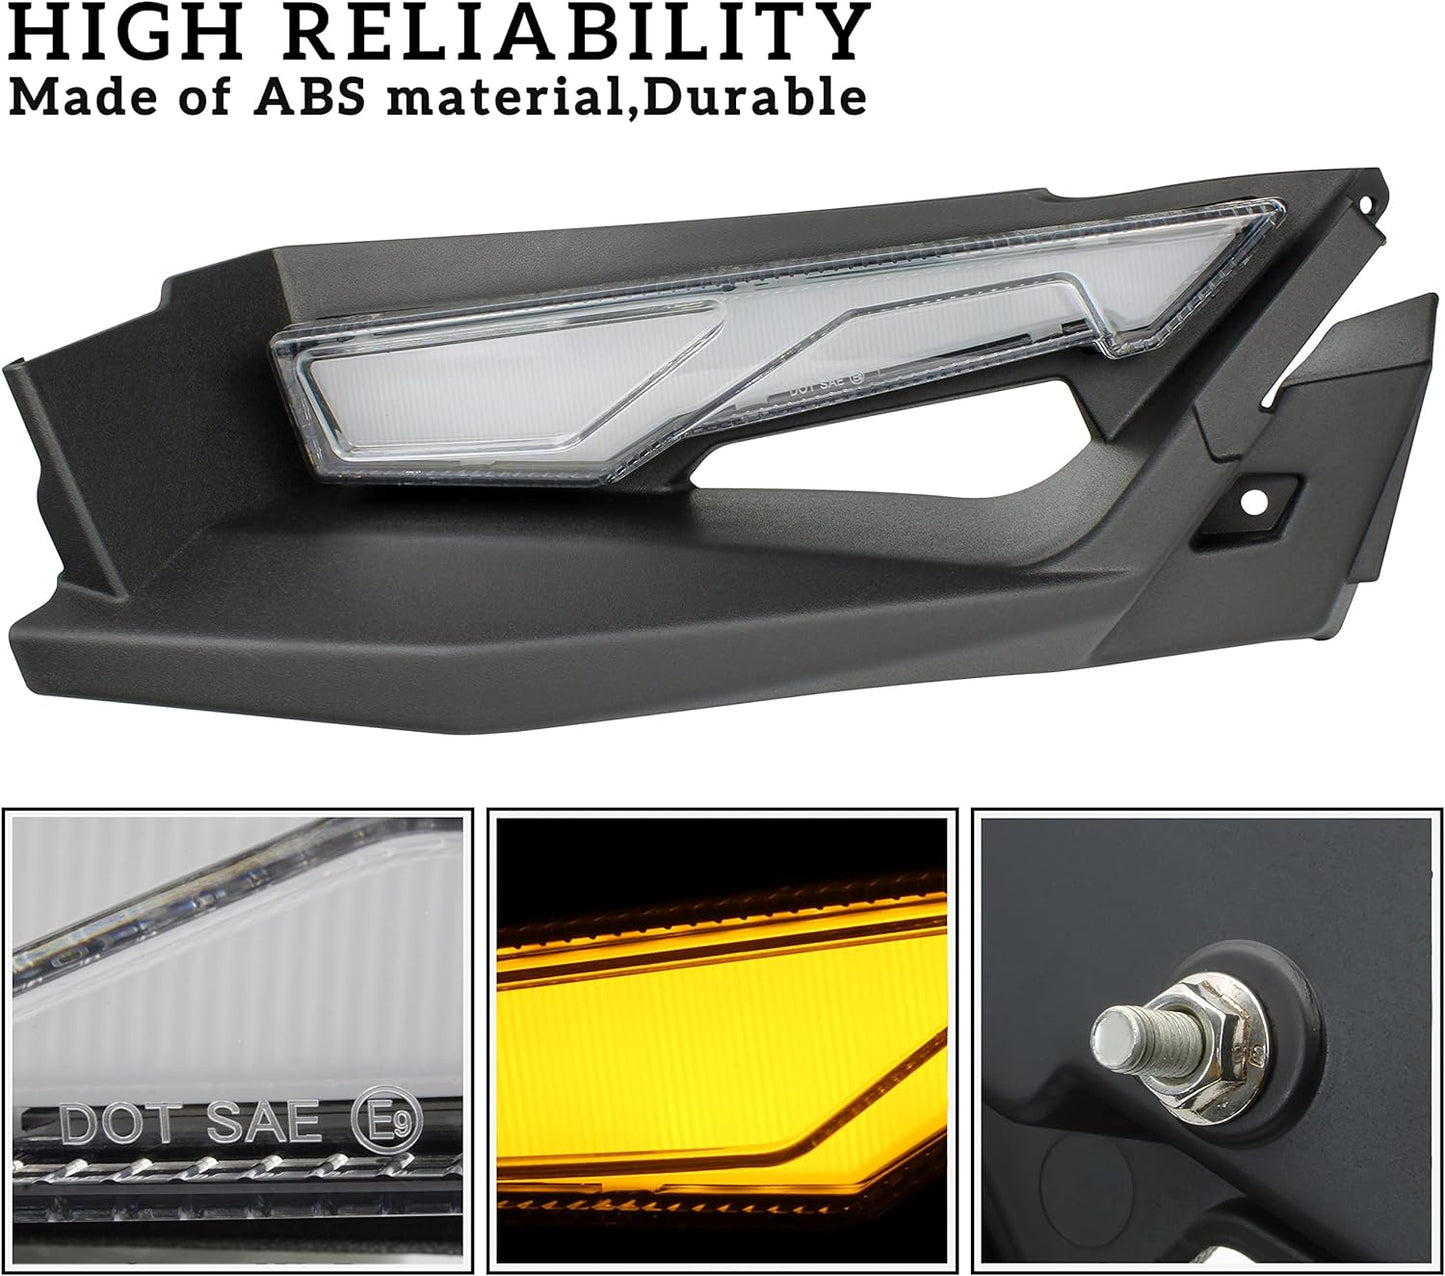 Front Upper Accent Panel & Light Assembly Kit for Slingshot All Models